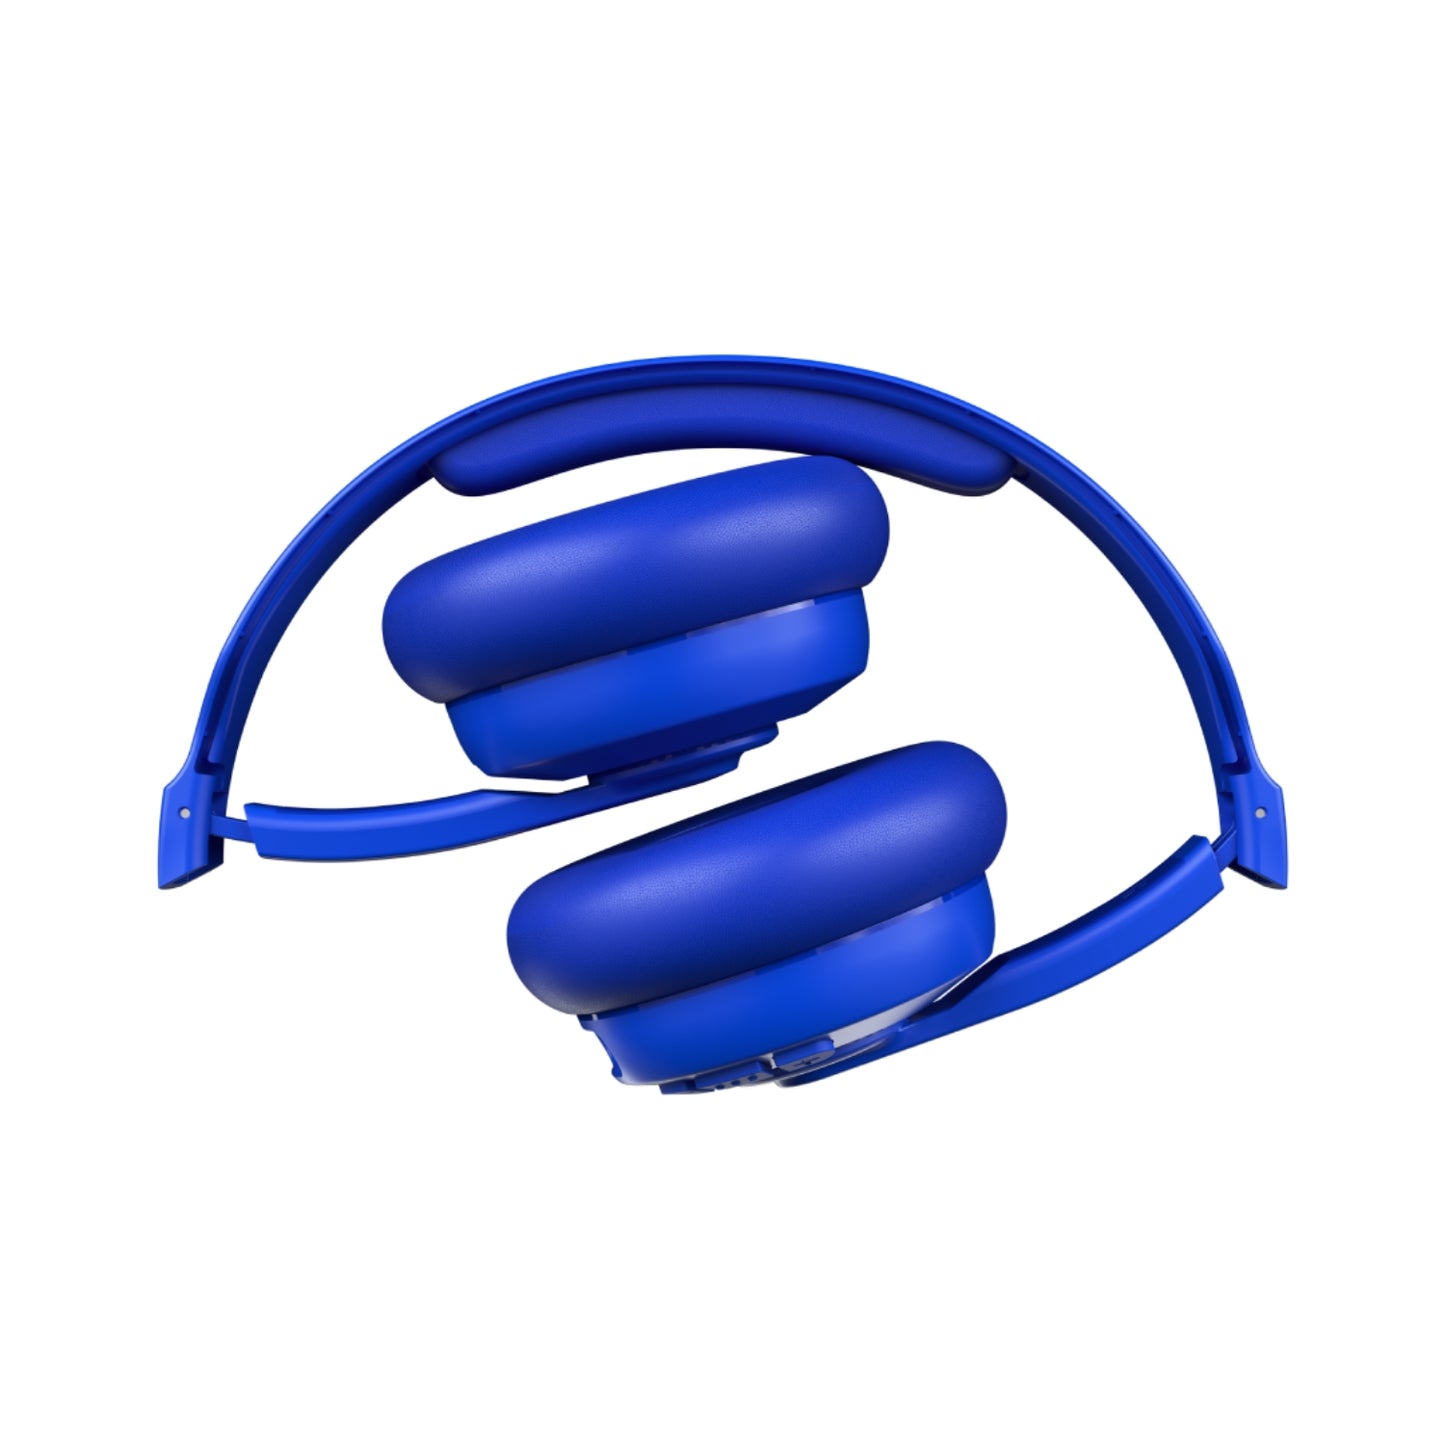 Audifono Skullcandy Cassette BT On Ear con microfono - Azul